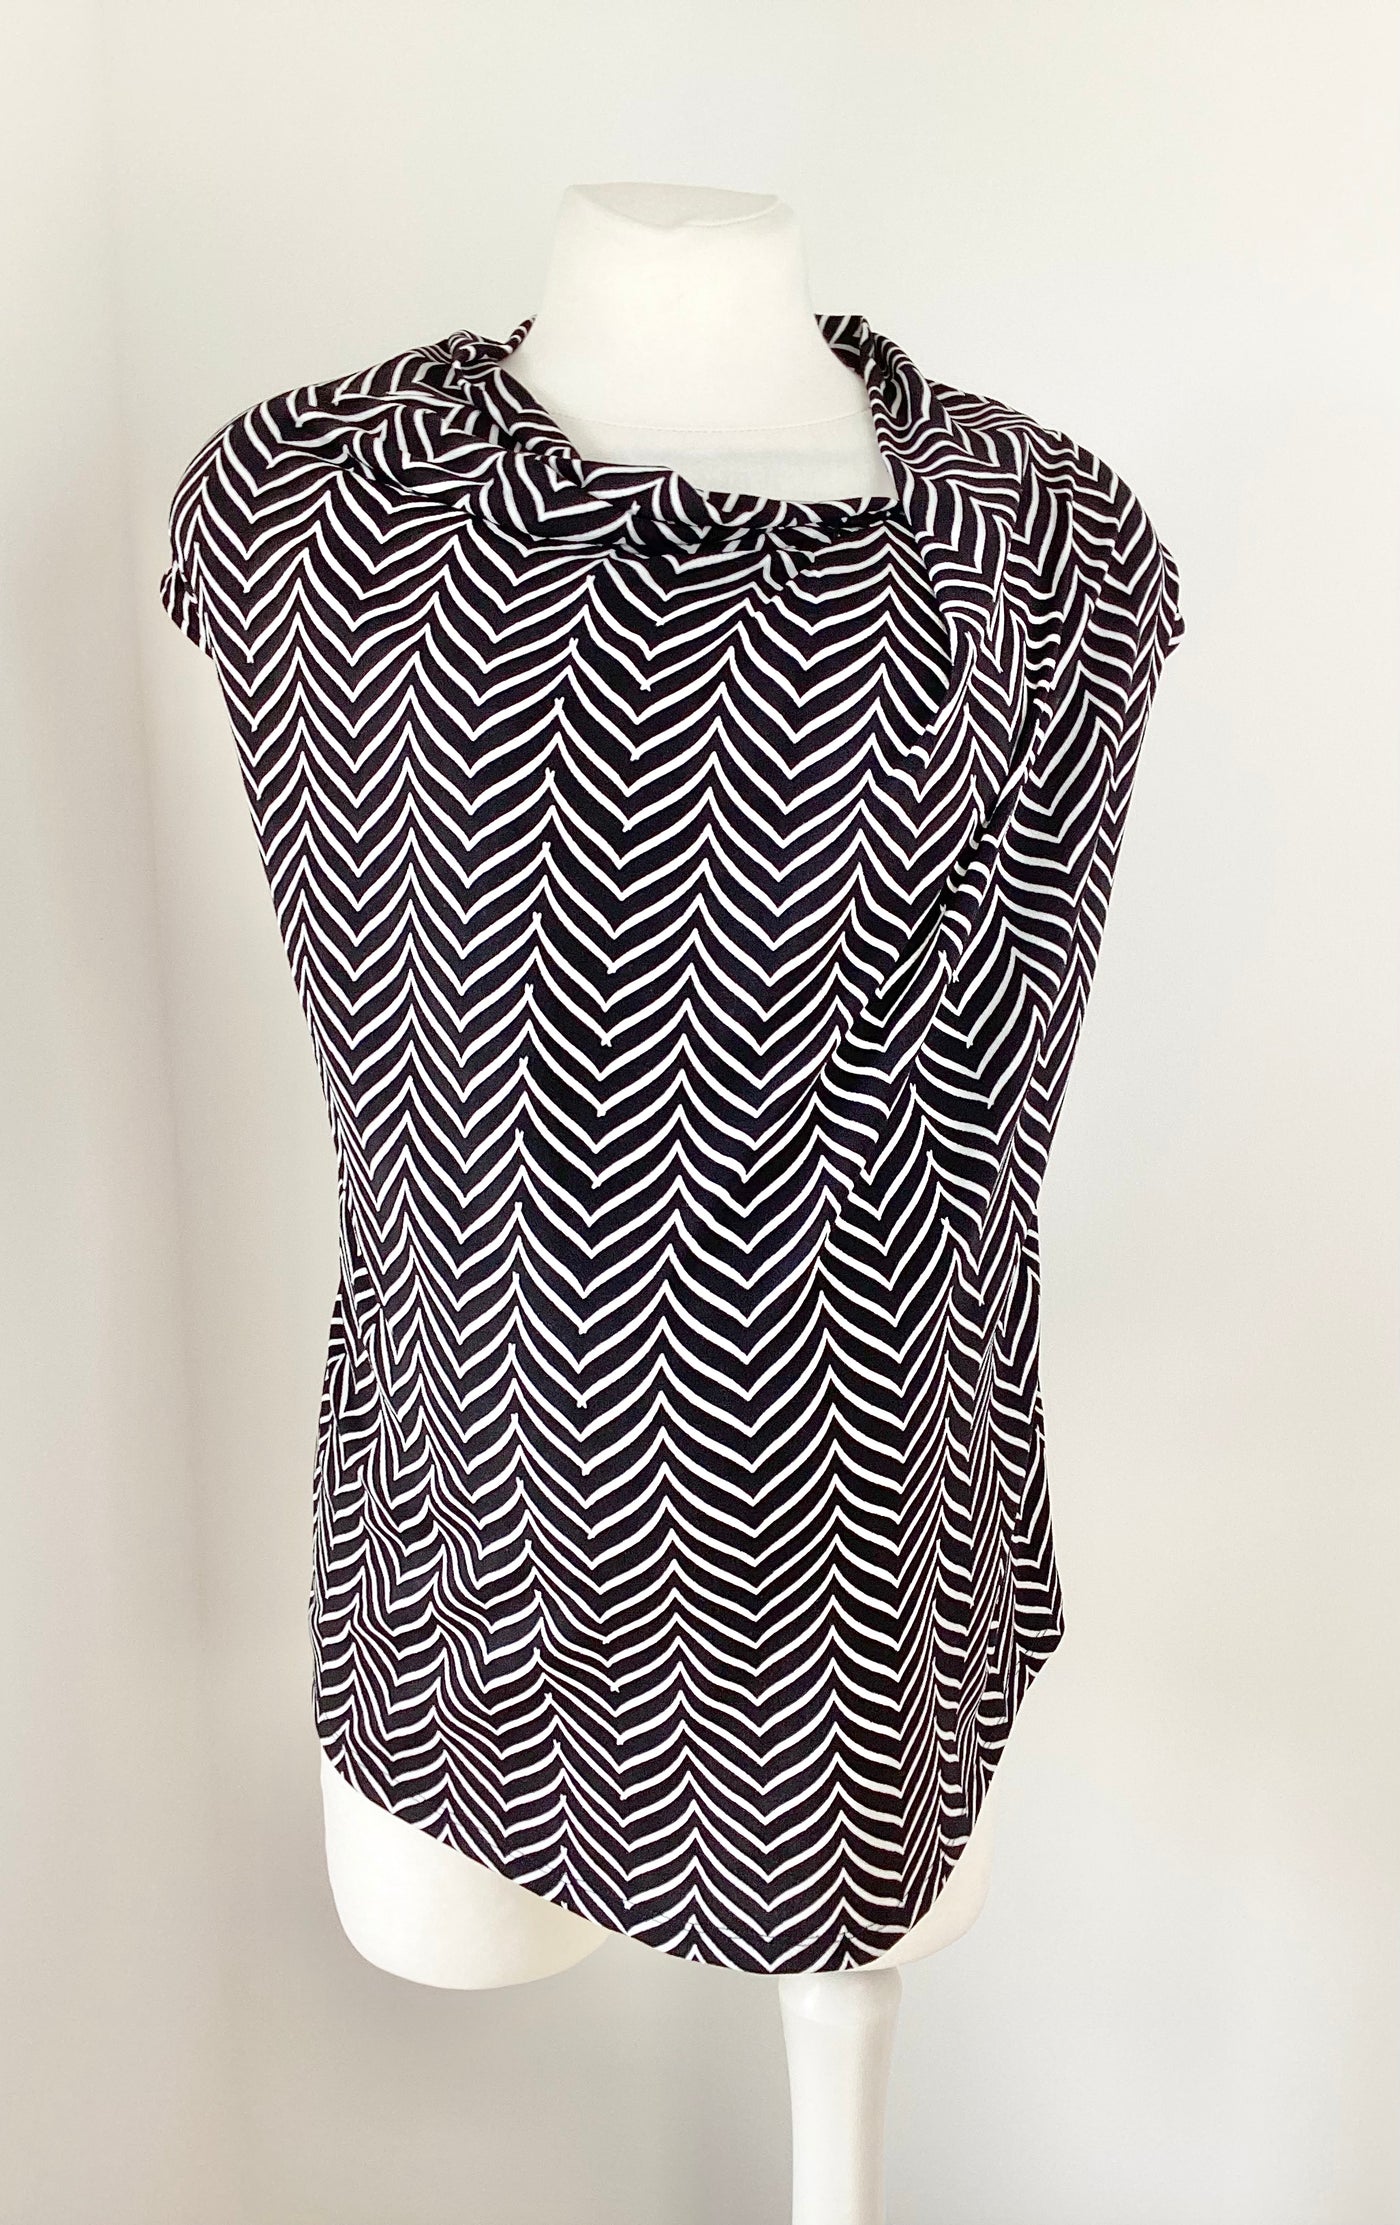 Next Maternity black & white sleeveless top with gathered neckline - Size 10